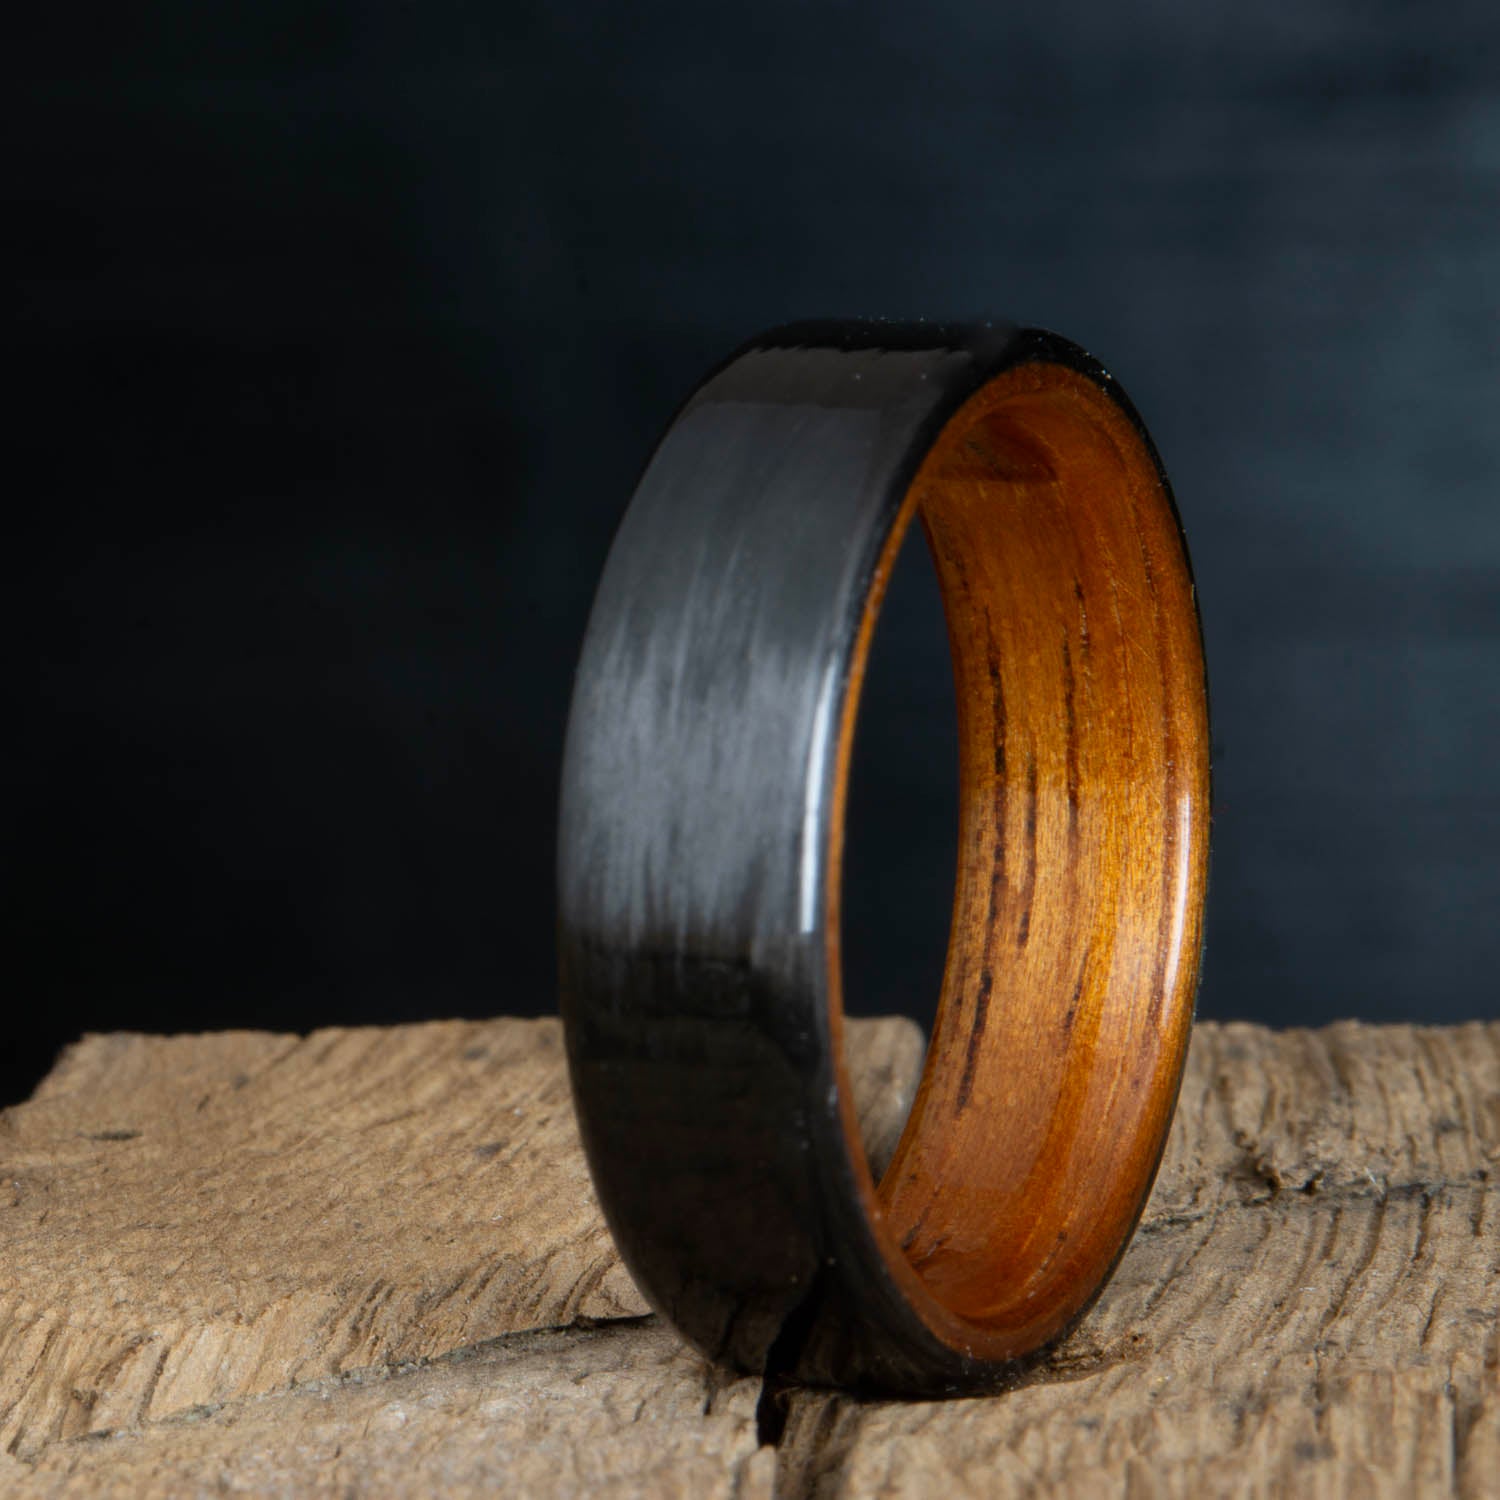 Carbon fiber ring with Koa wood interior